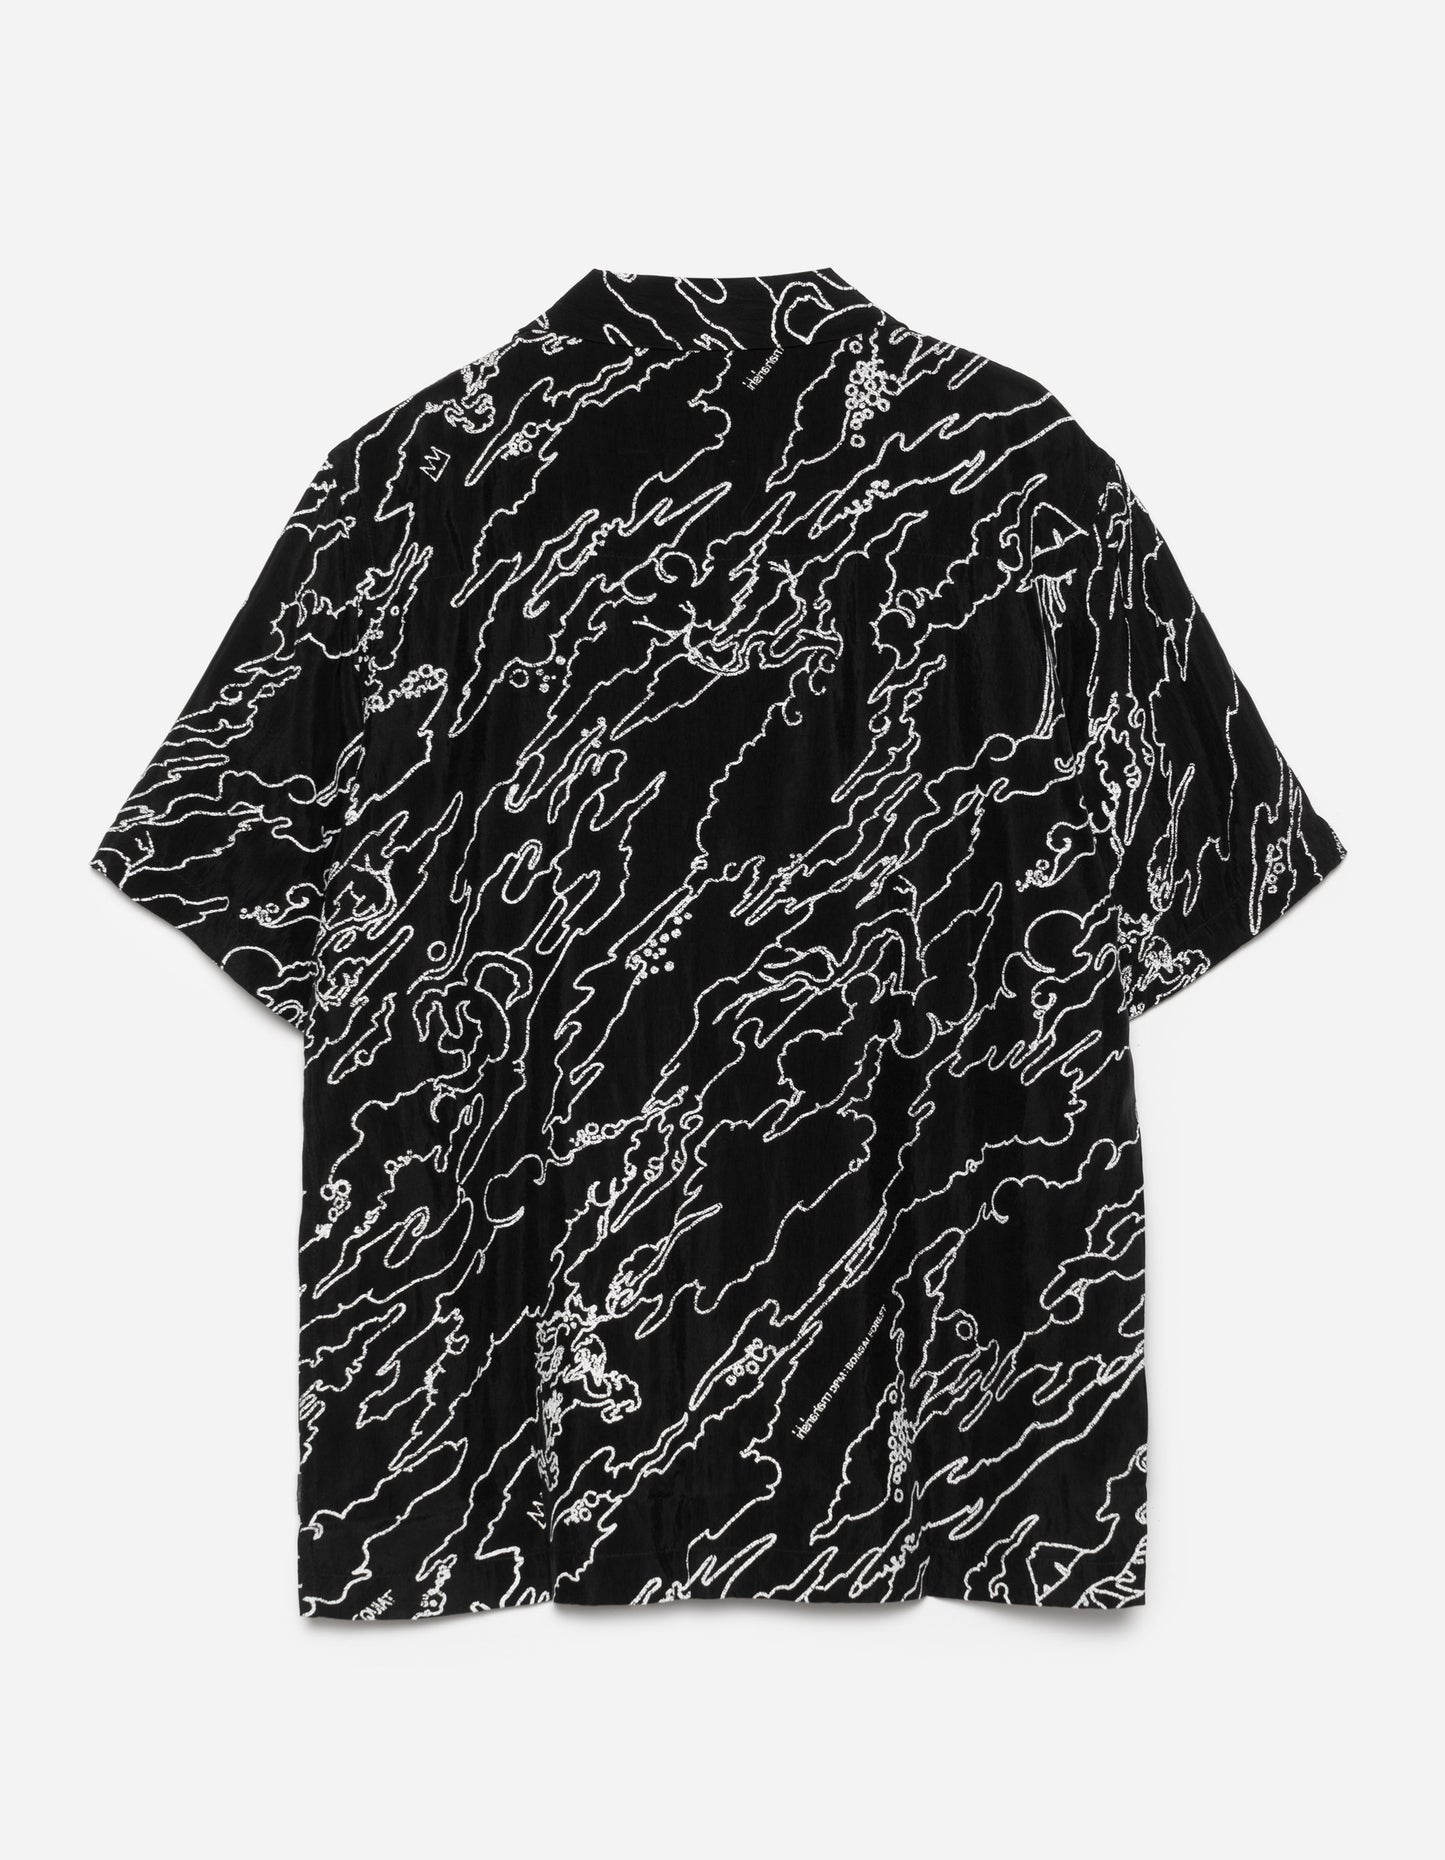 1312 Maha Basquiat Camo Shirt Black